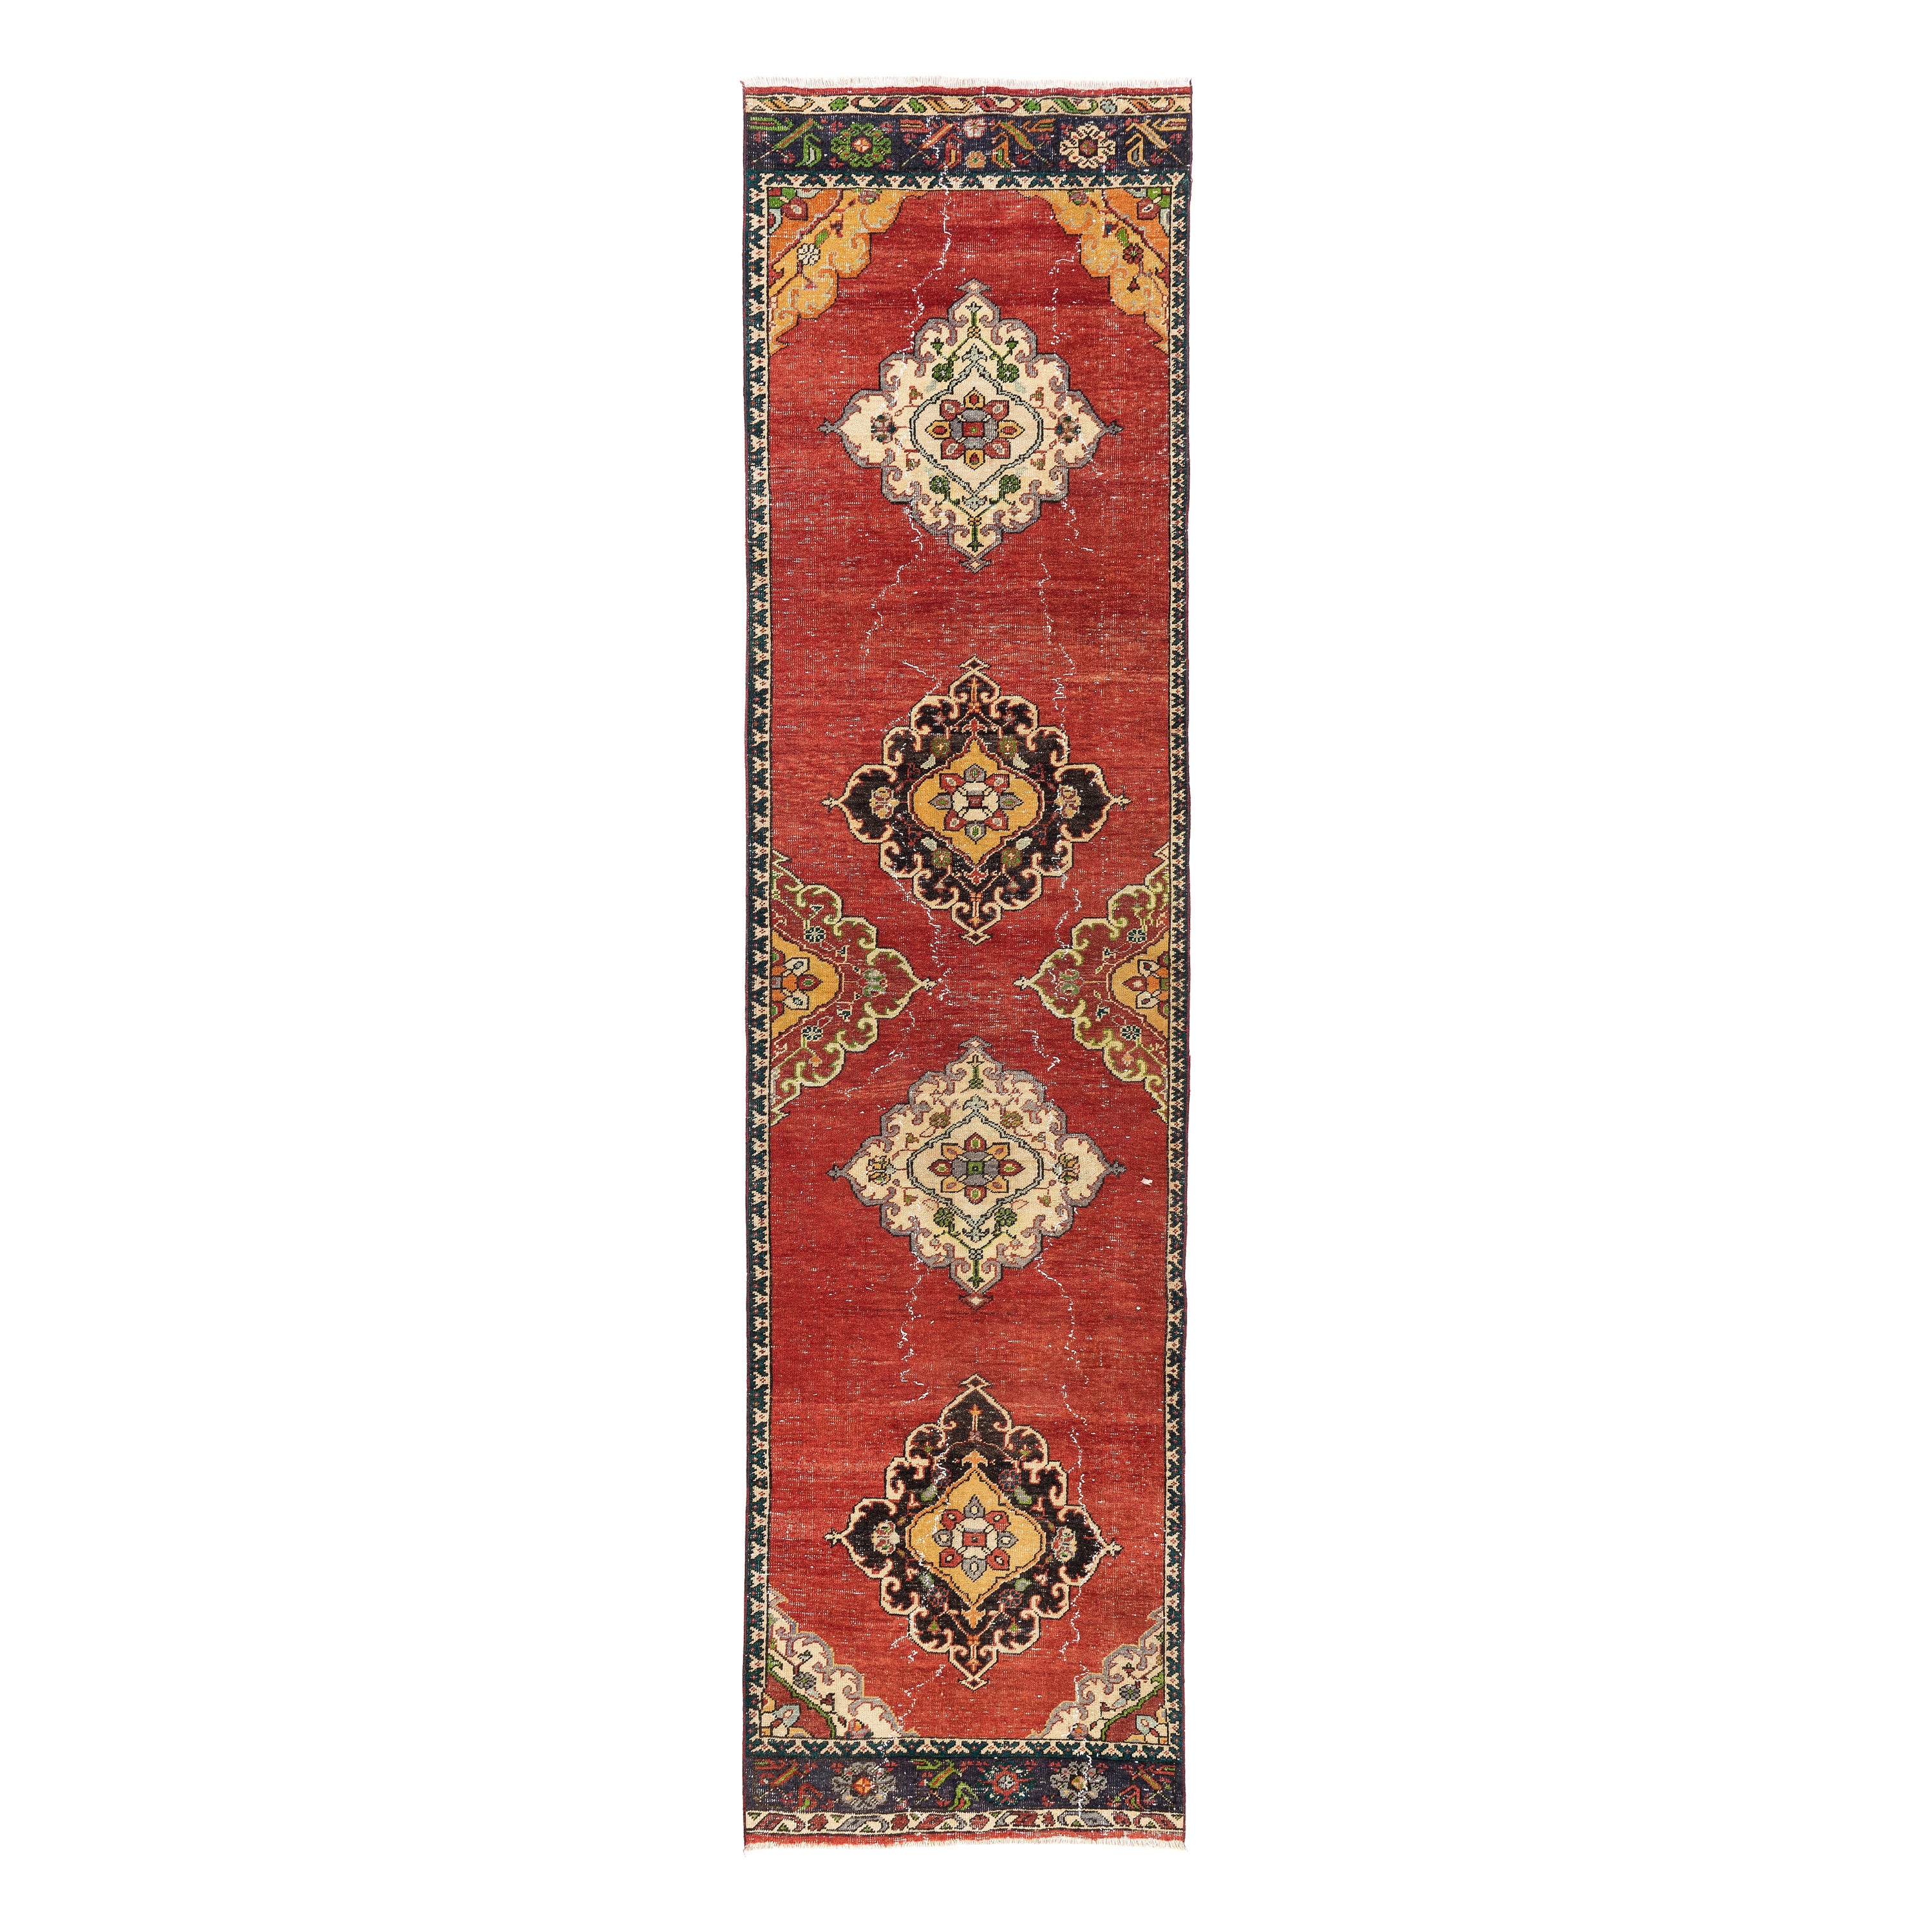 3x12 Ft Unique Vintage Turkish Runner Rug, Traditional Handmade Carpet, All Wool